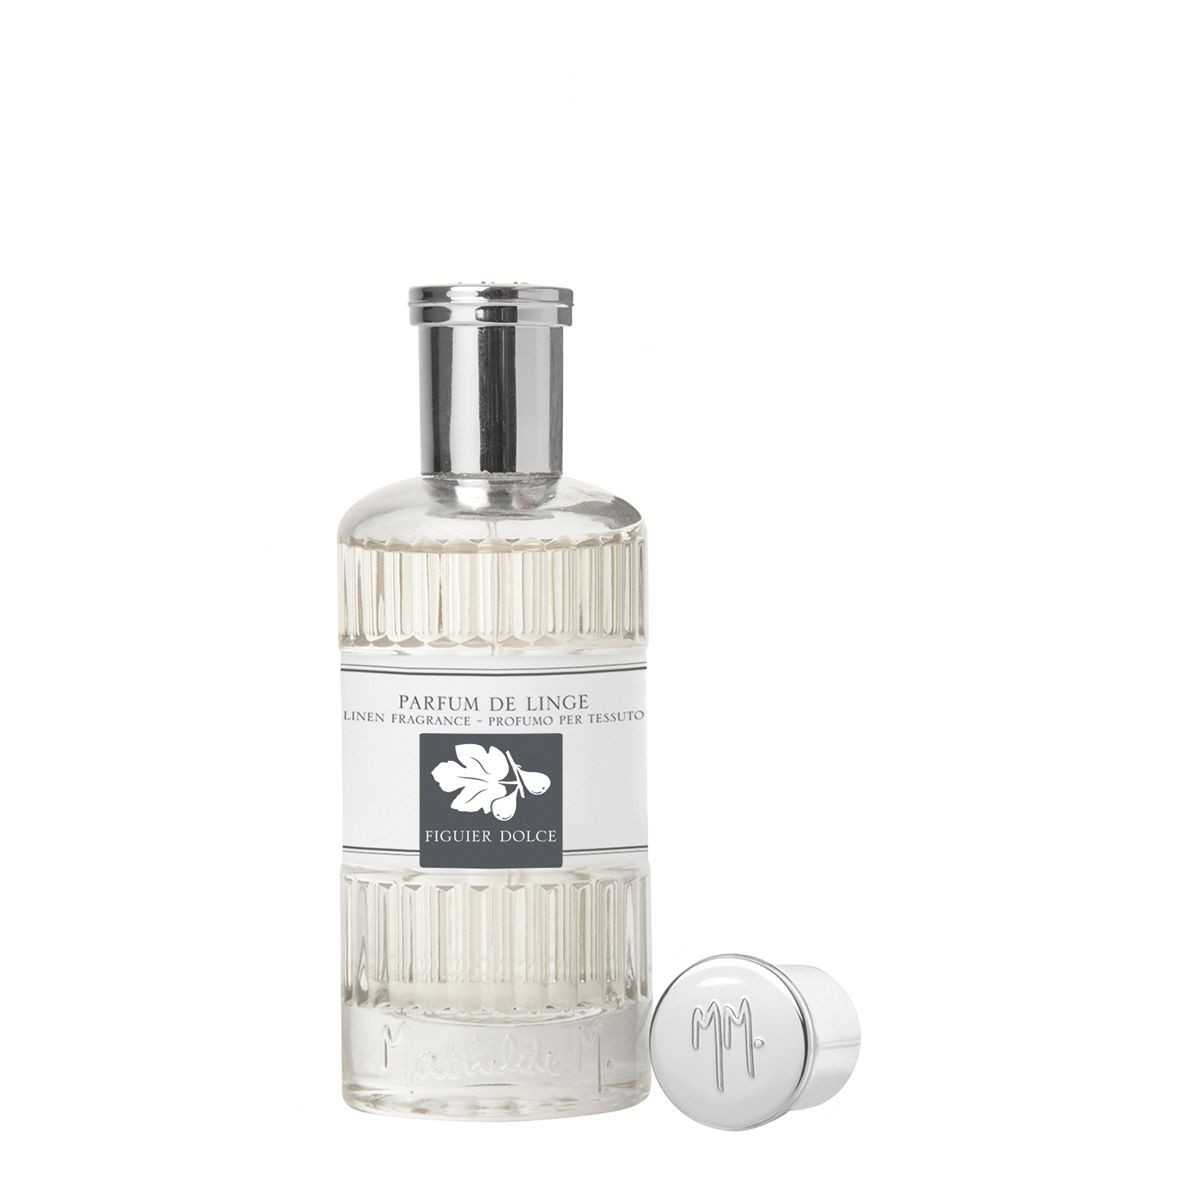 Perfume de lino 75 ml - Dolce higuera